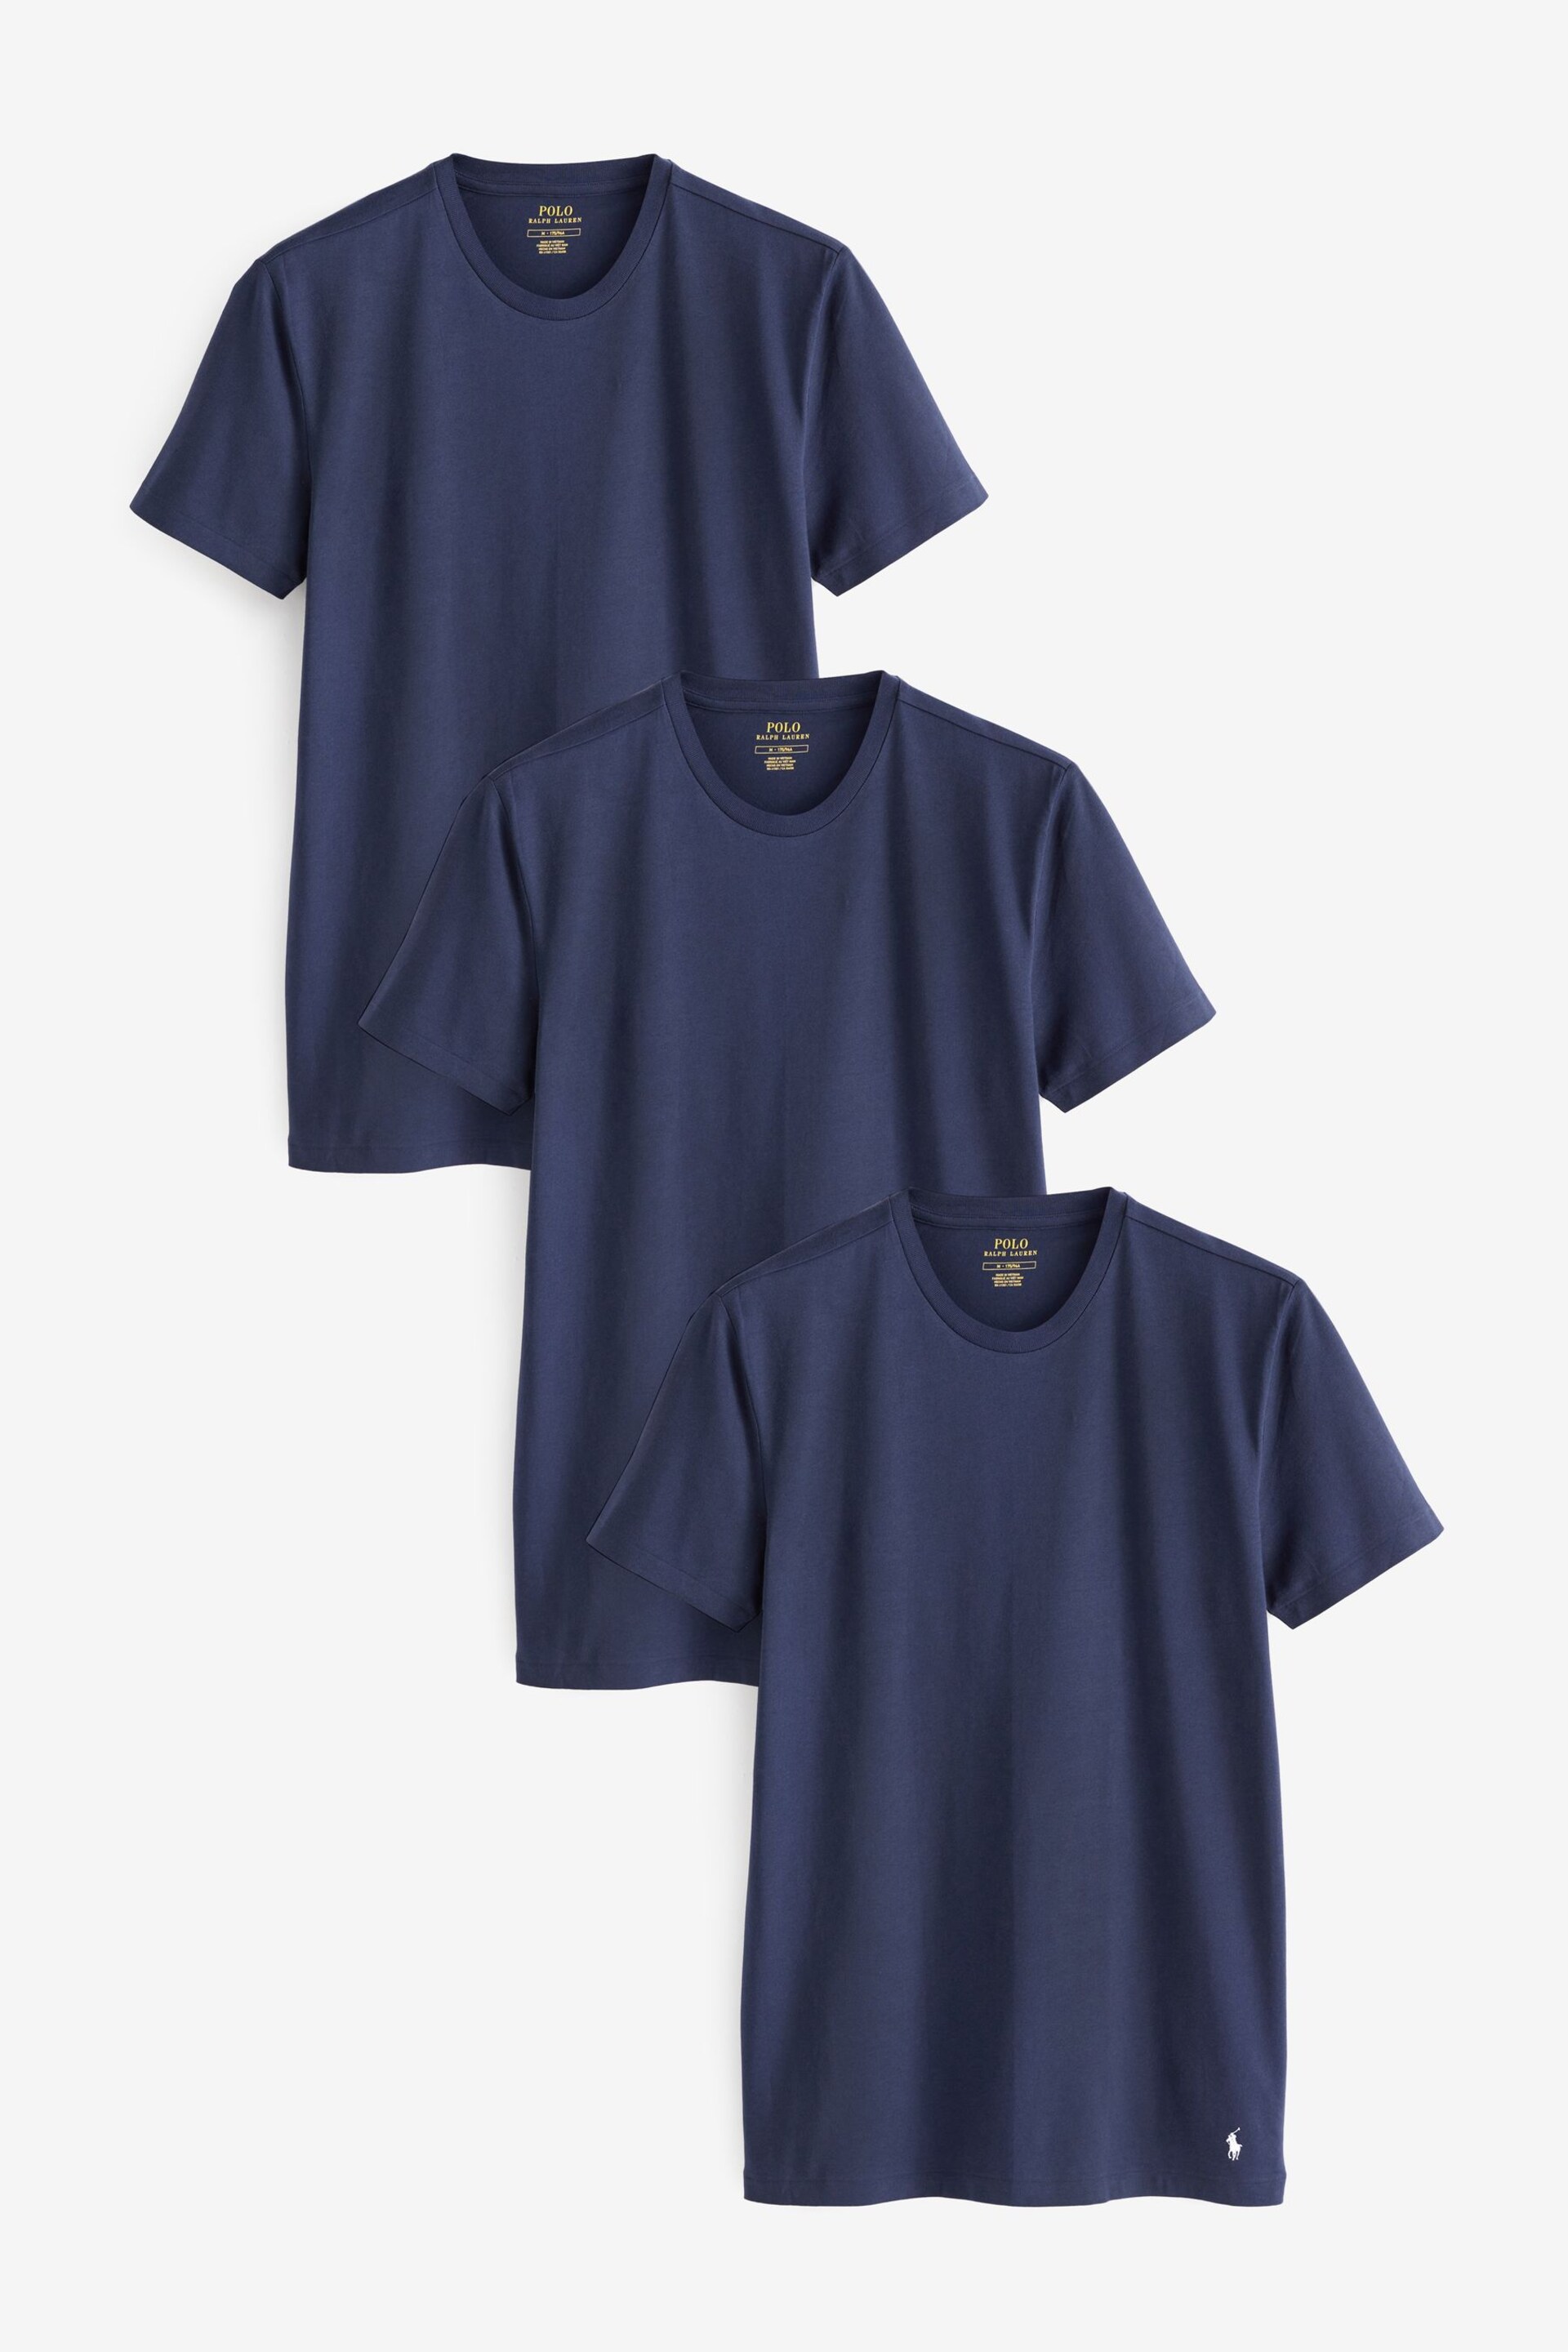 Polo Ralph Lauren Crew Neck Under Shirts 3 Packs - Image 5 of 8